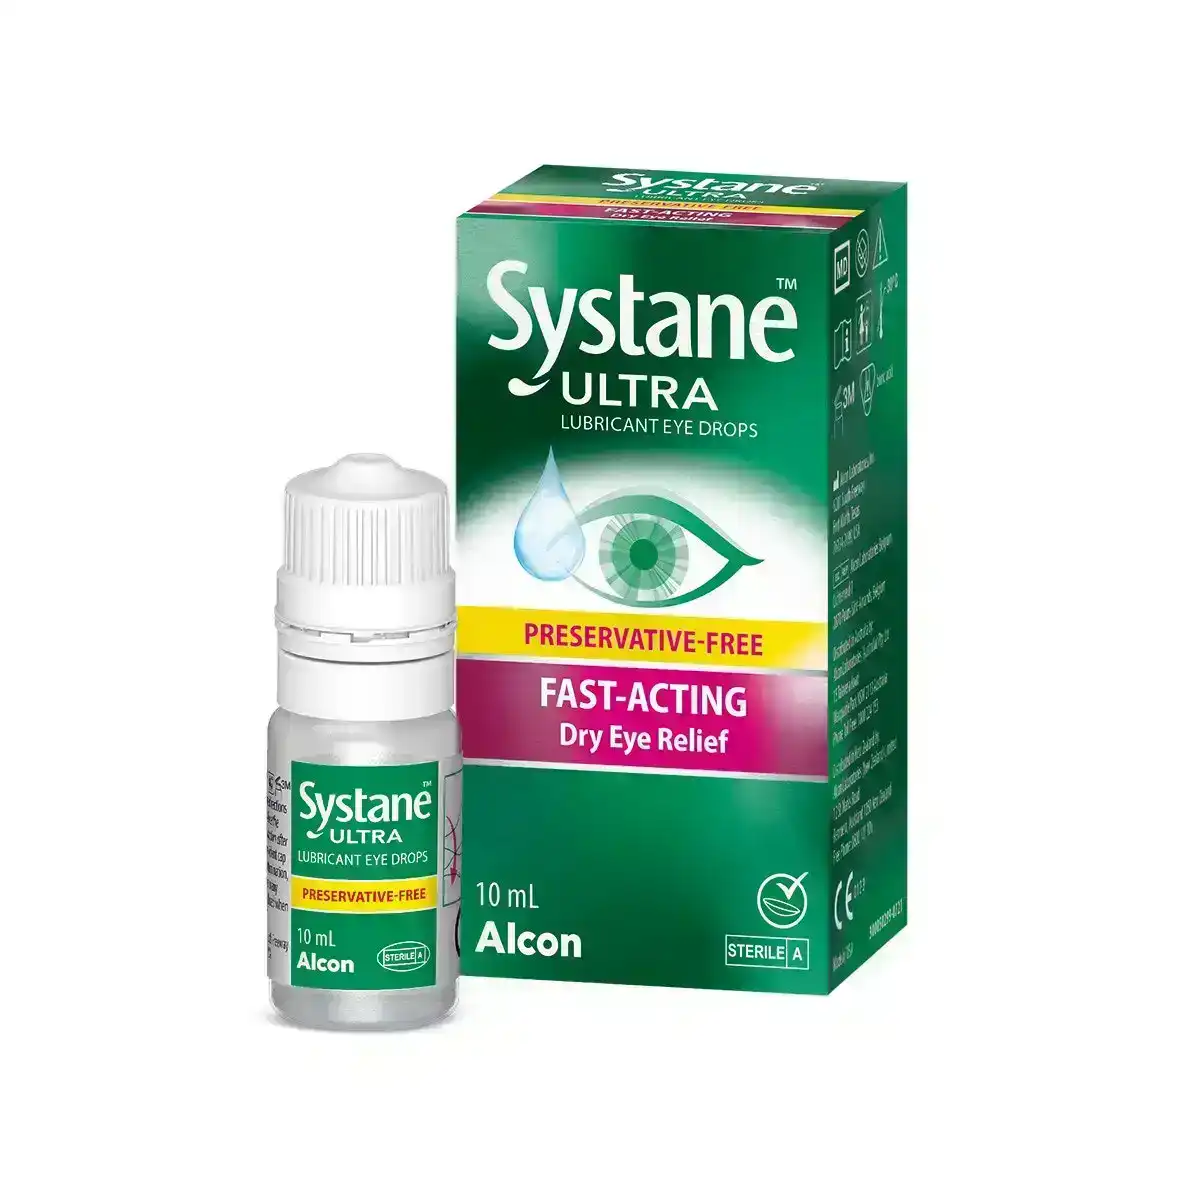 SYSTANE Ultra Preservative-Free Lubricant Eye Drops 10mL